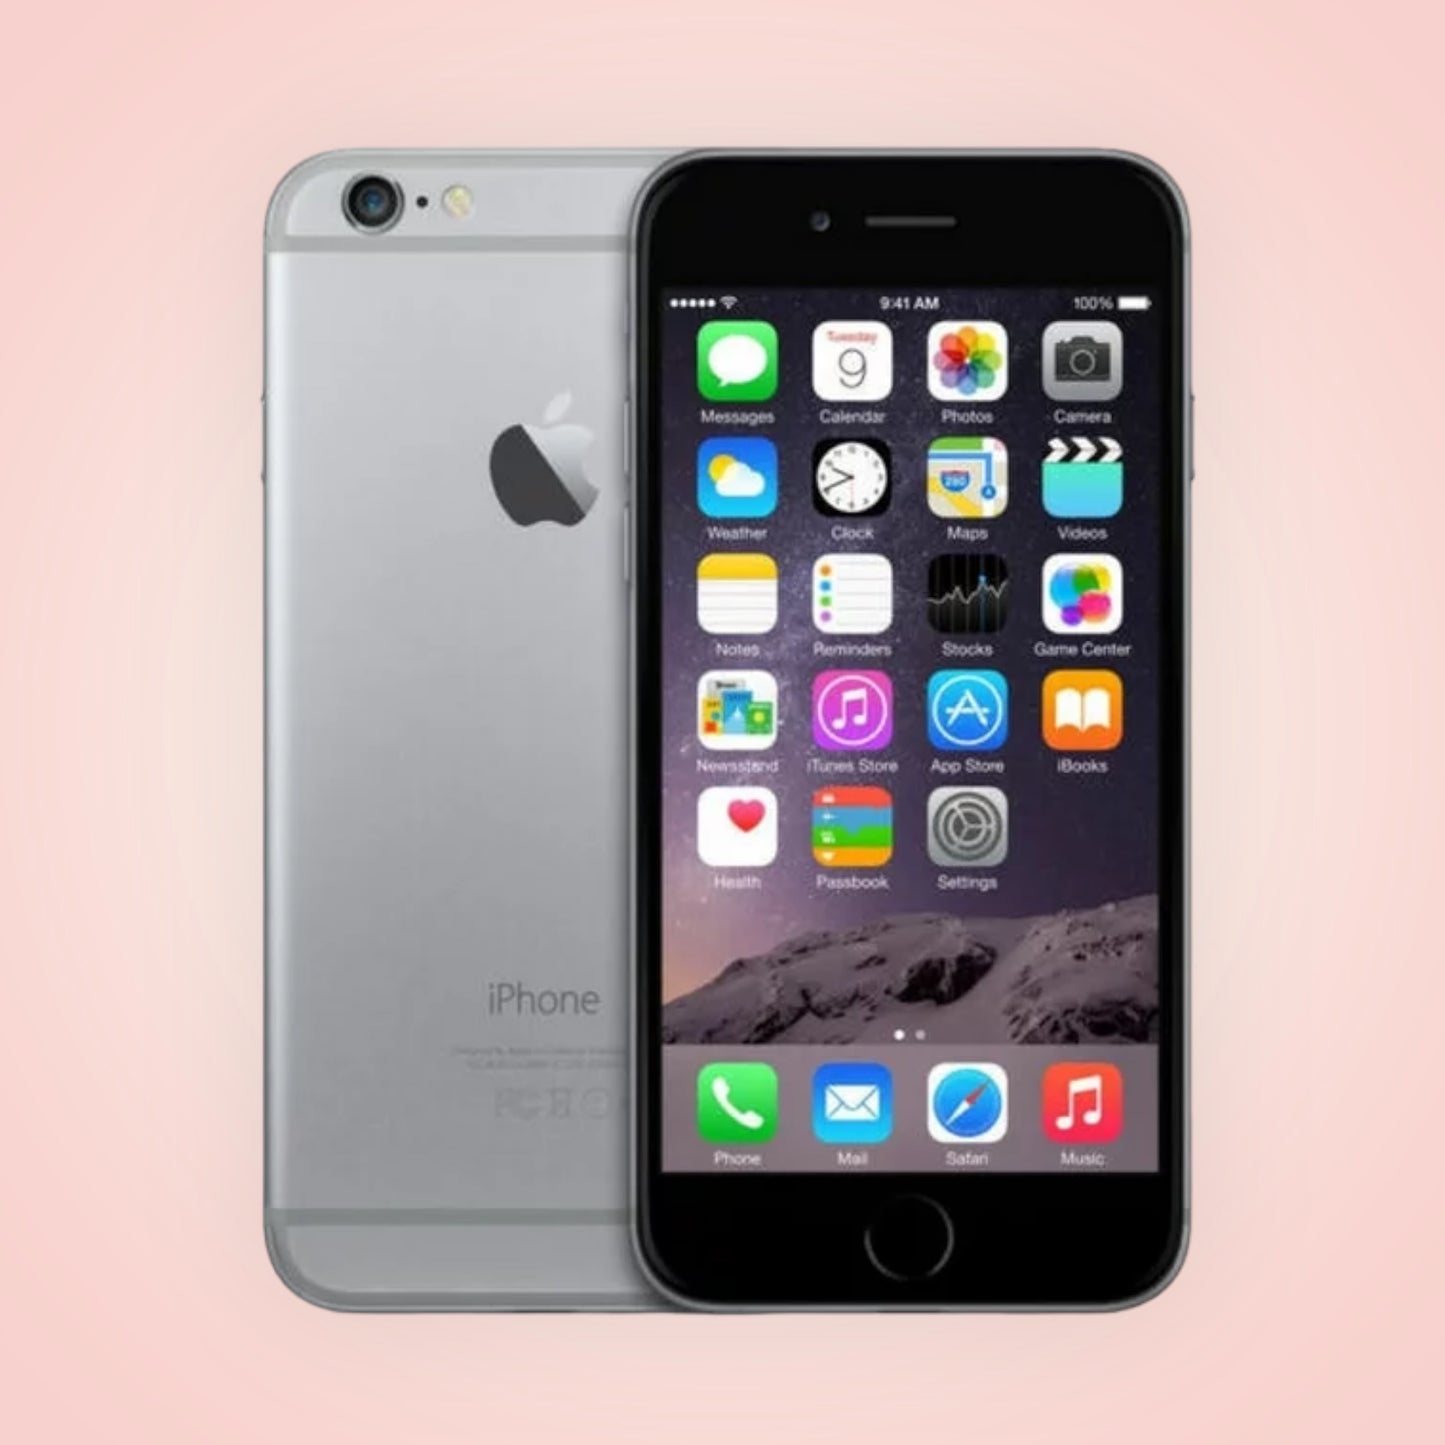 iPhone 6 - 64GB - Space Gray - CDMA GSM Unlocked